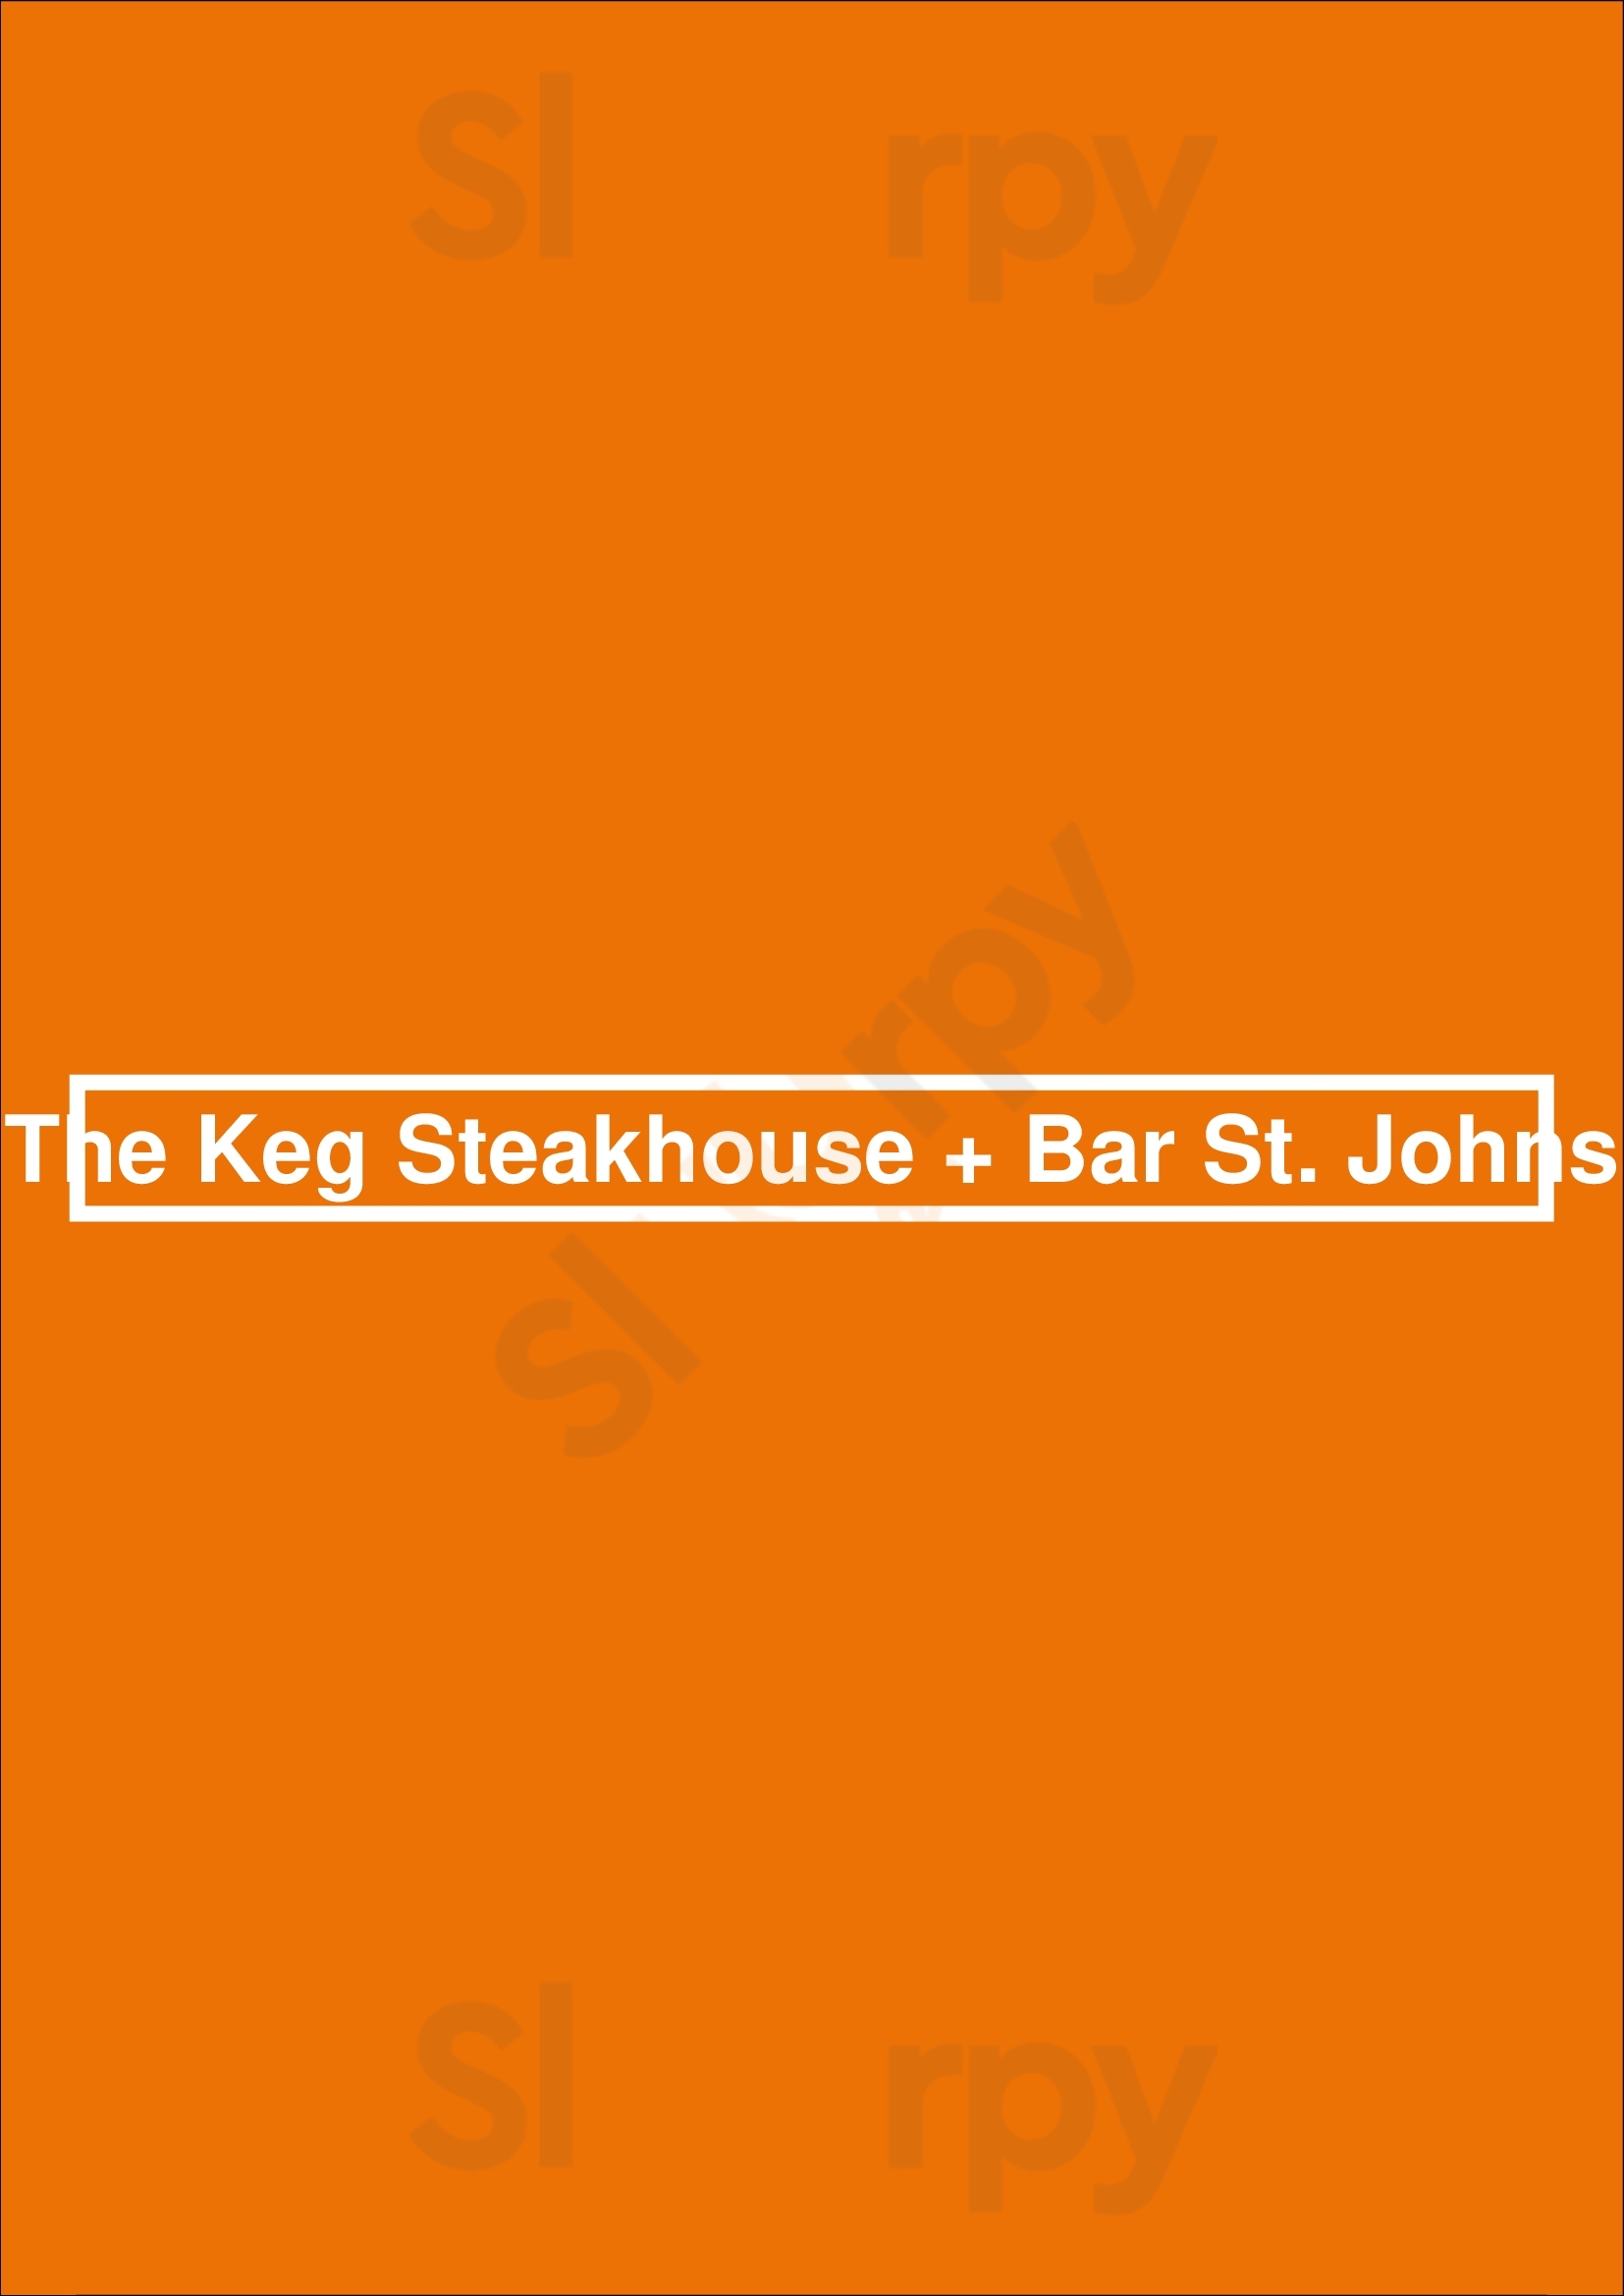 The Keg Steakhouse + Bar St. Johns St. John's Menu - 1